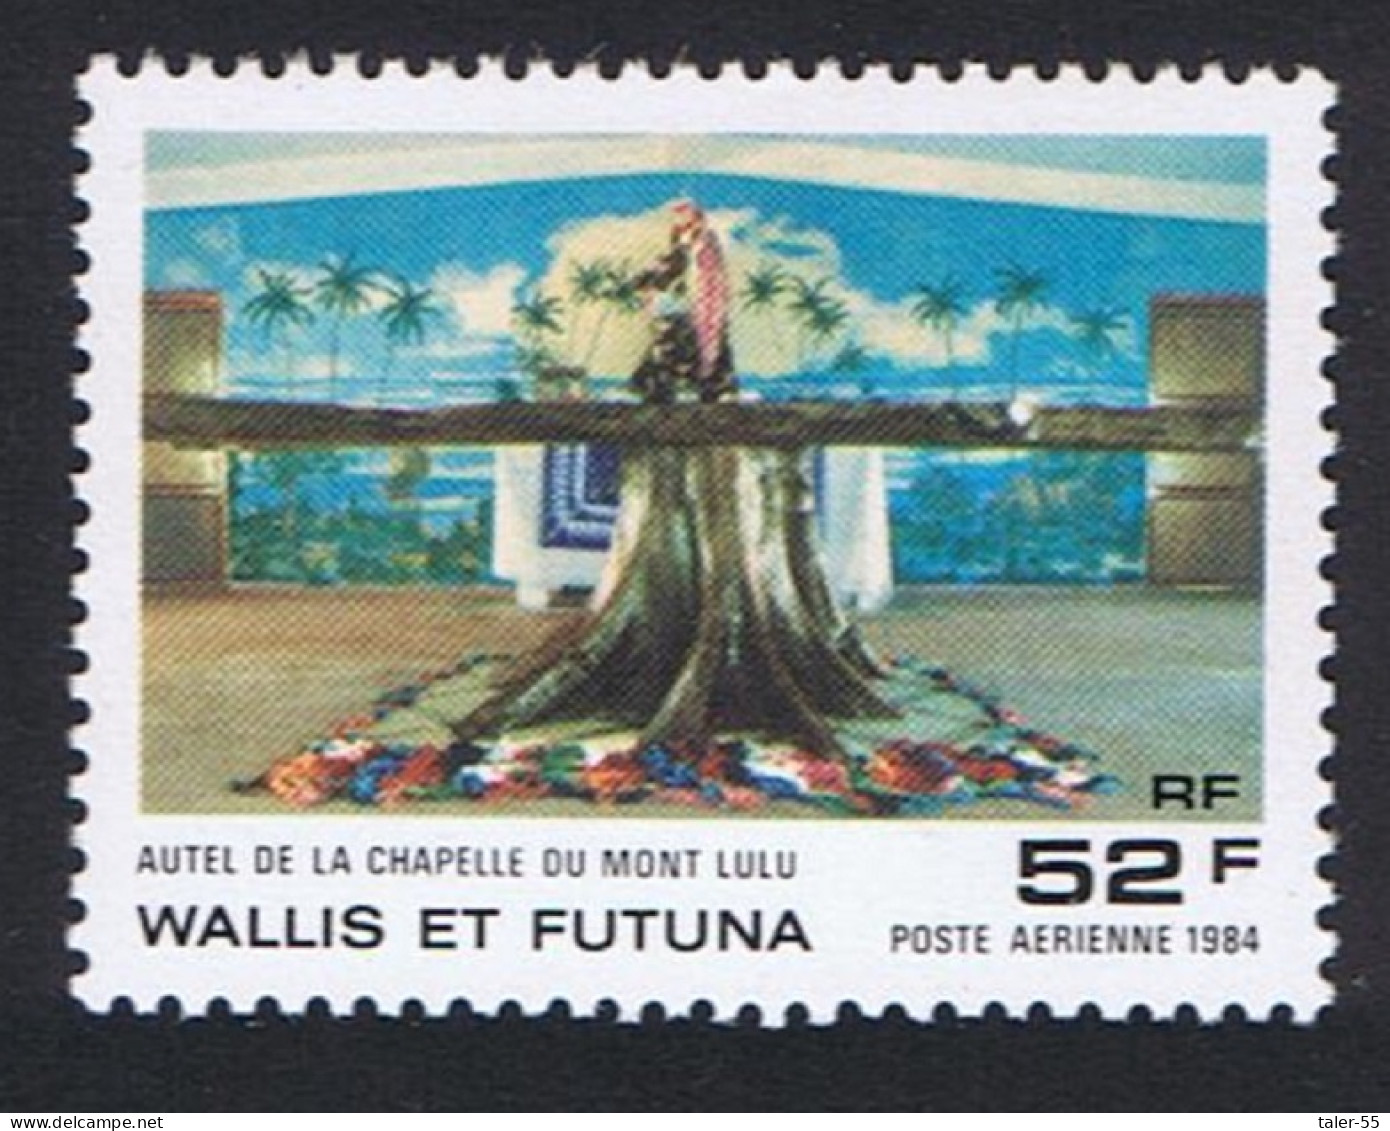 Wallis And Futuna Altar Mount Lulu Chapel Airmail 1984 MNH SG#455 Sc#C138 - Nuovi